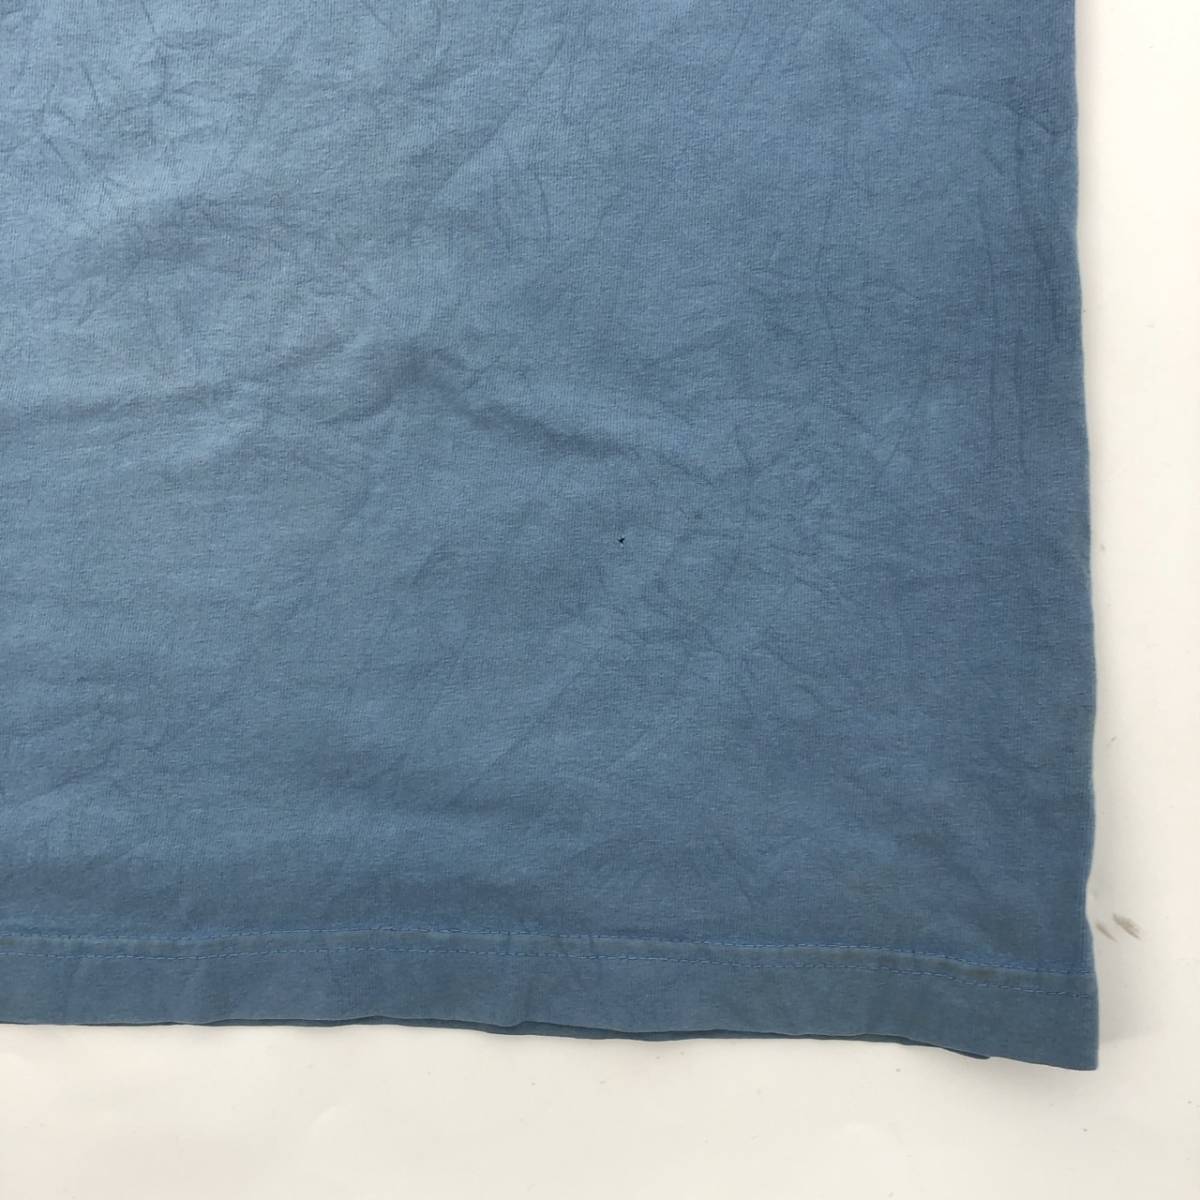 L carhartt カーハート Tシャツ ライトブルー 補修あり 半袖 リユース ultramto ts1646